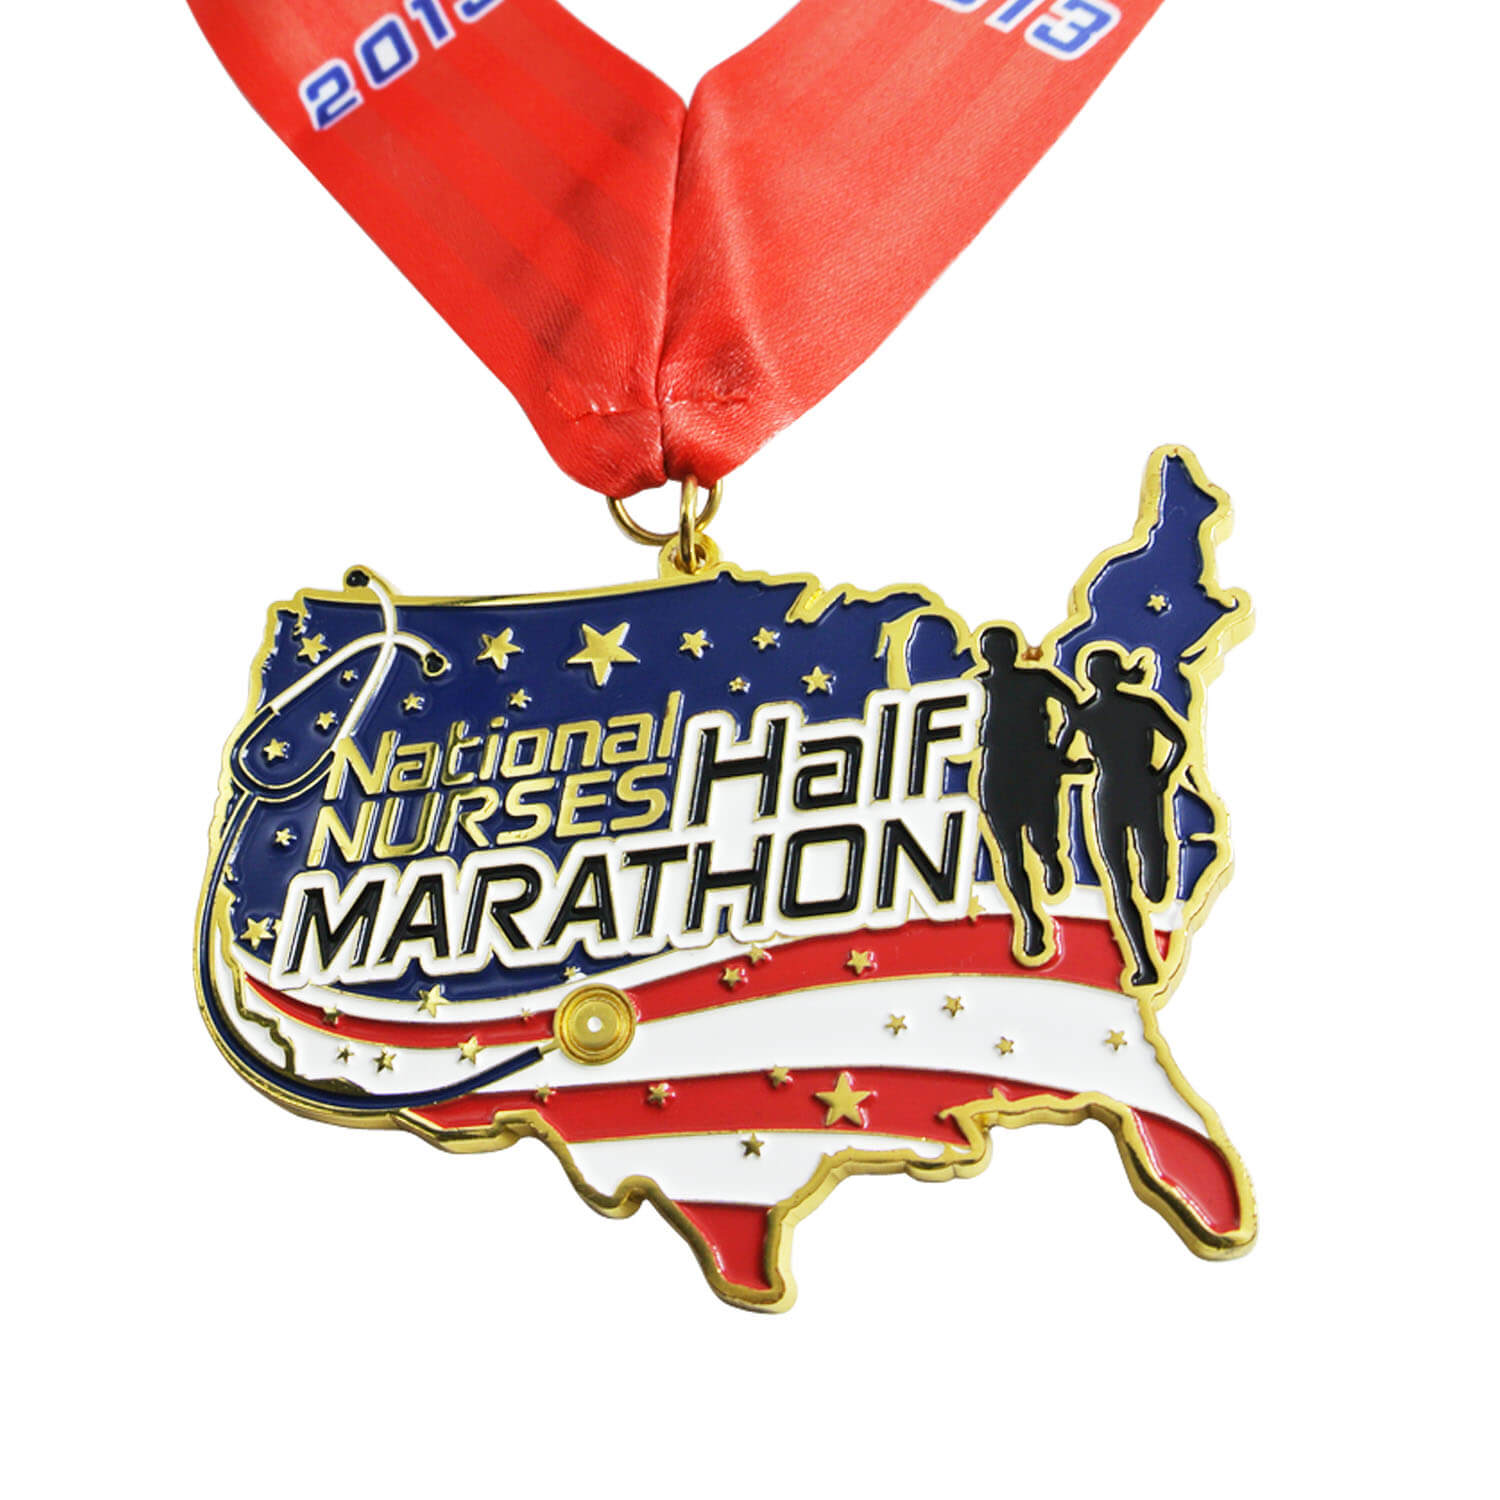 Introduction of Boston Marathon